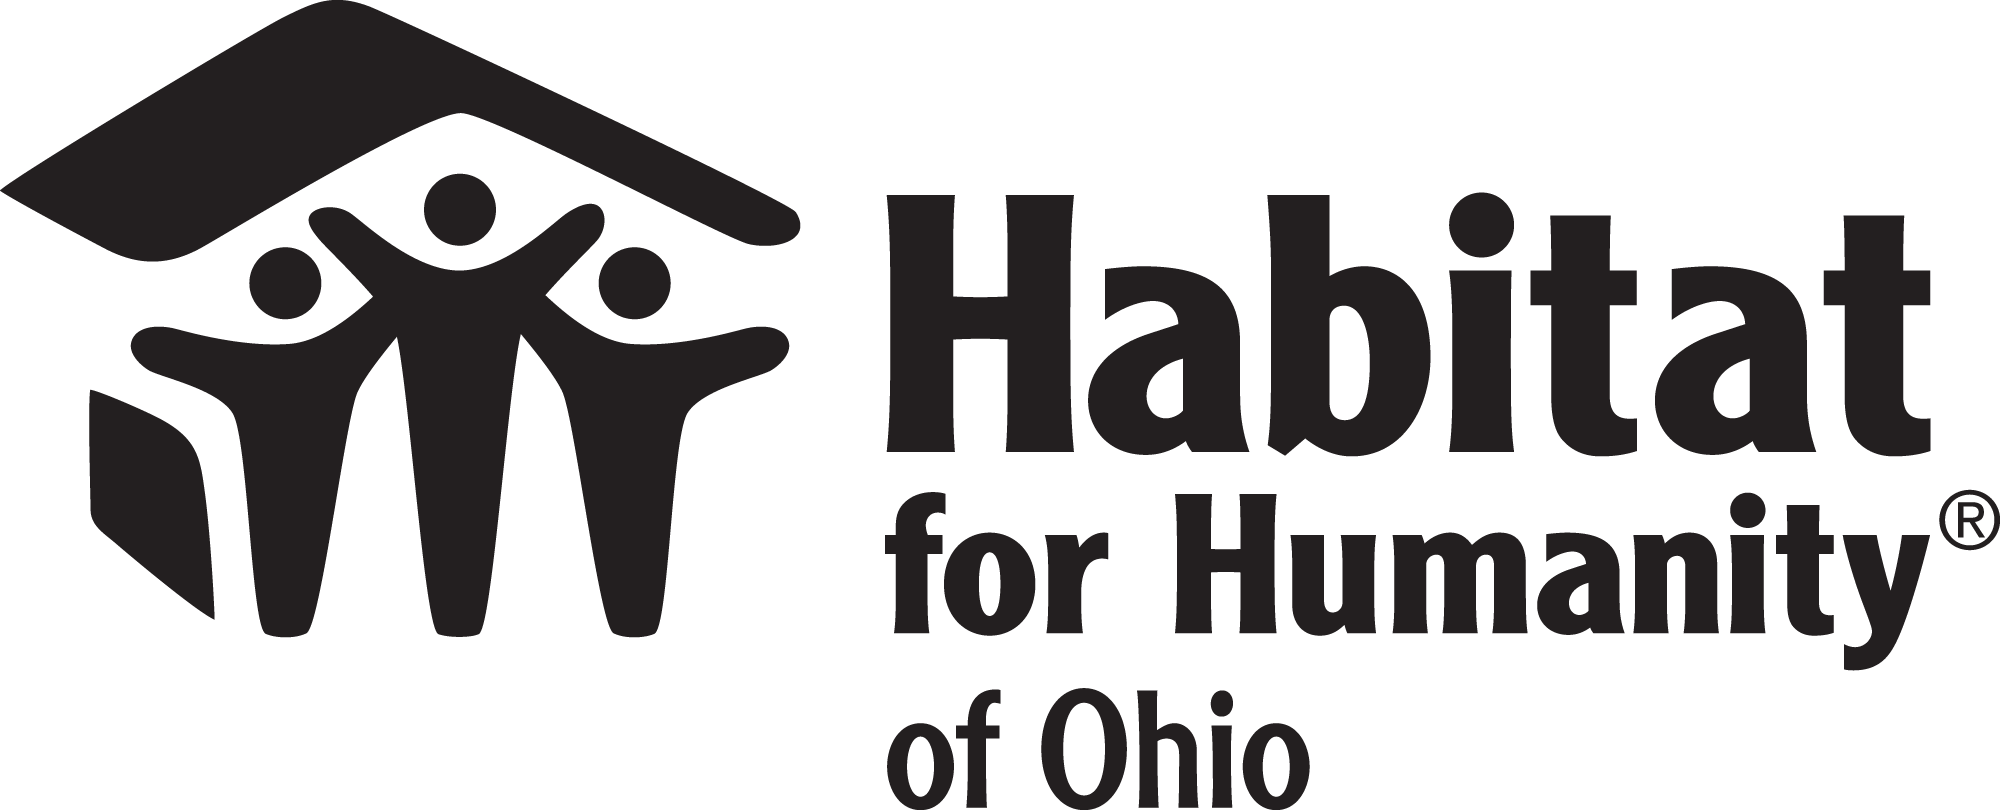 Habitat for Humanity of Ohio